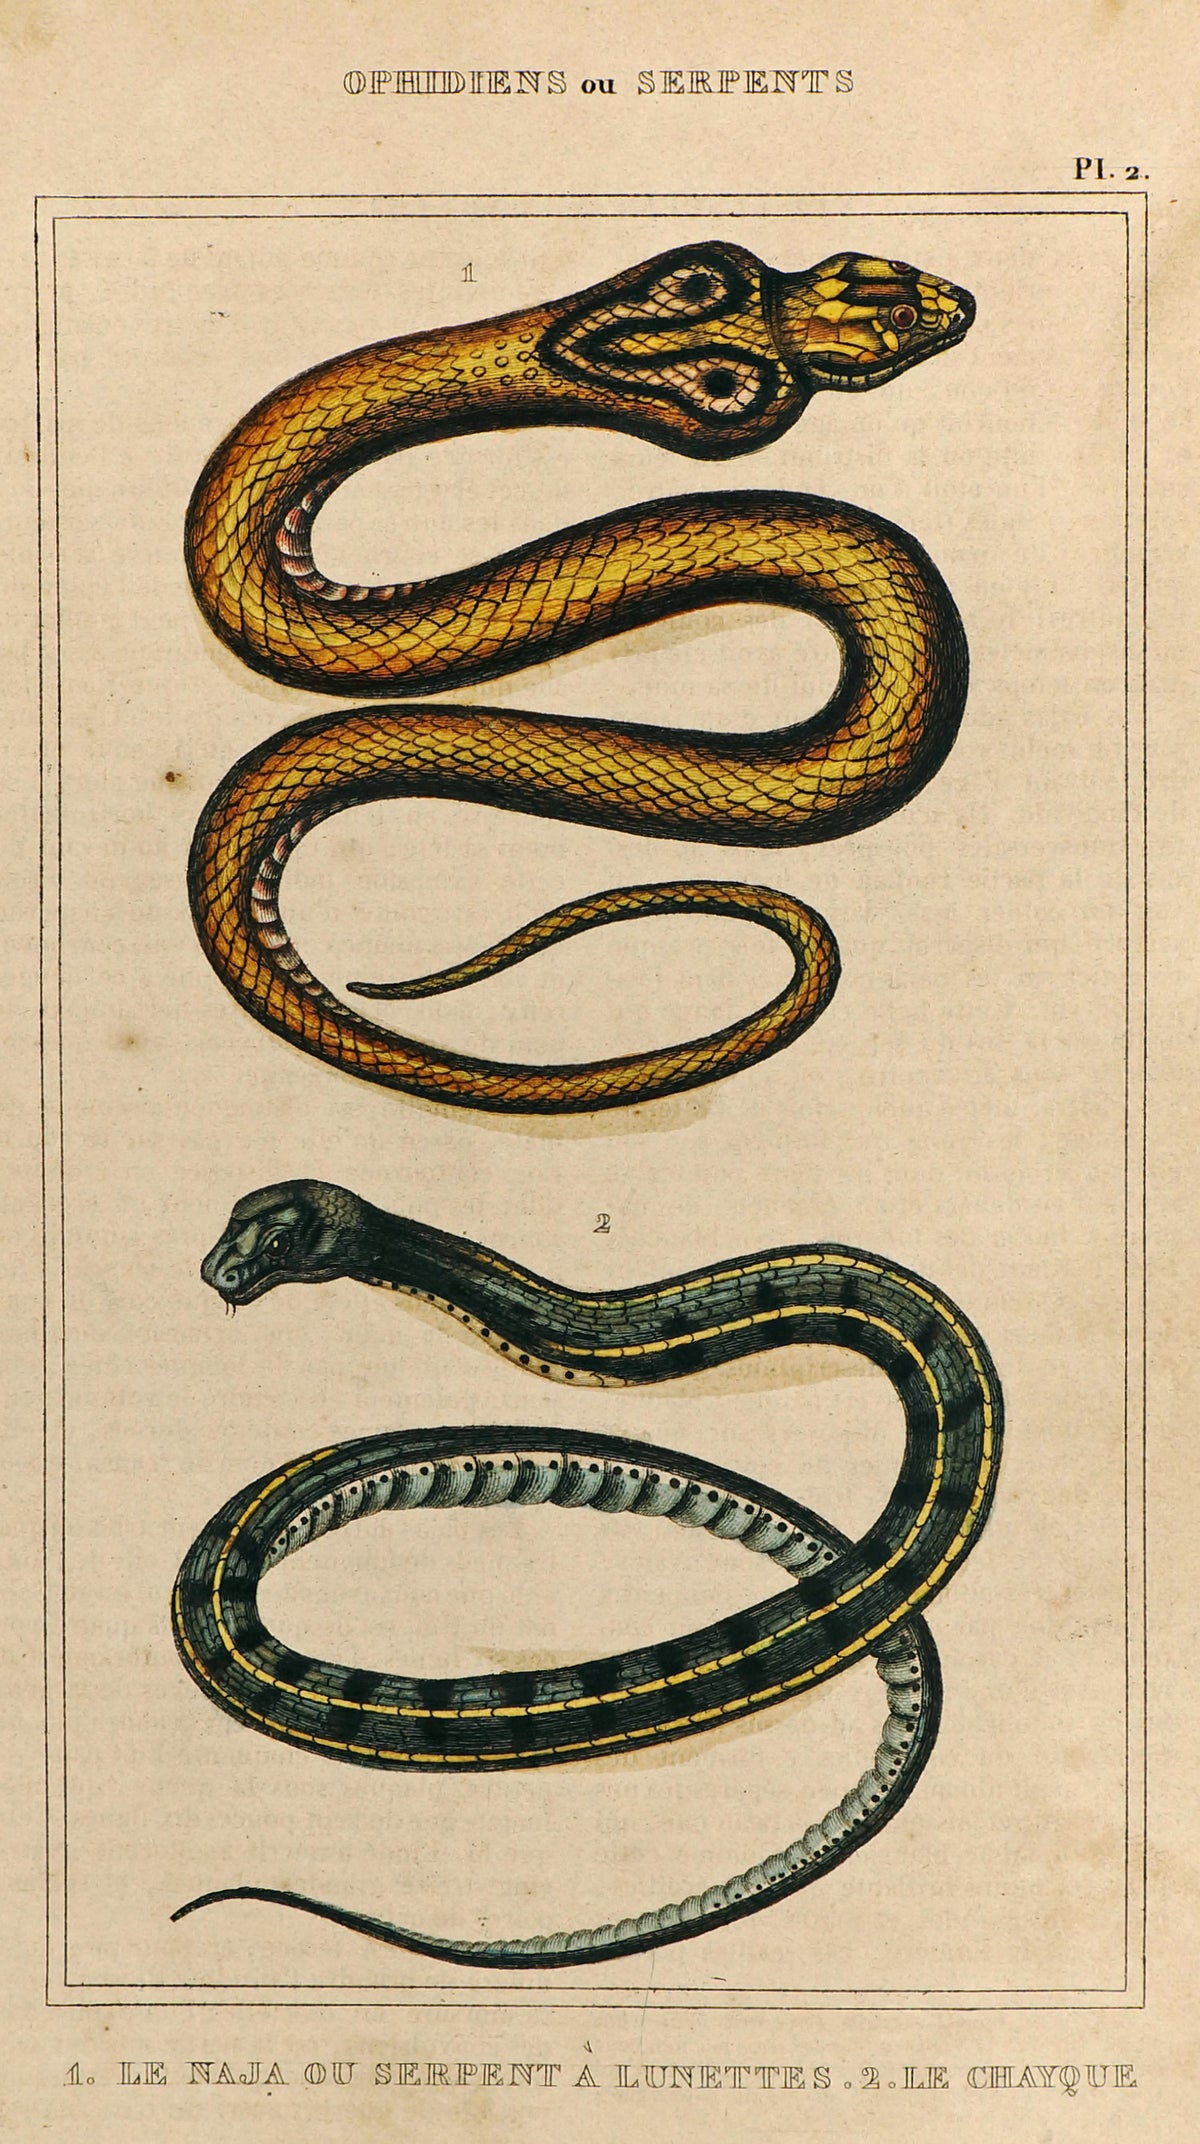 Naja Cobra, Colubrid Snakes, Hand Colored Antique Engraving - Authentic Vintage Antique Print